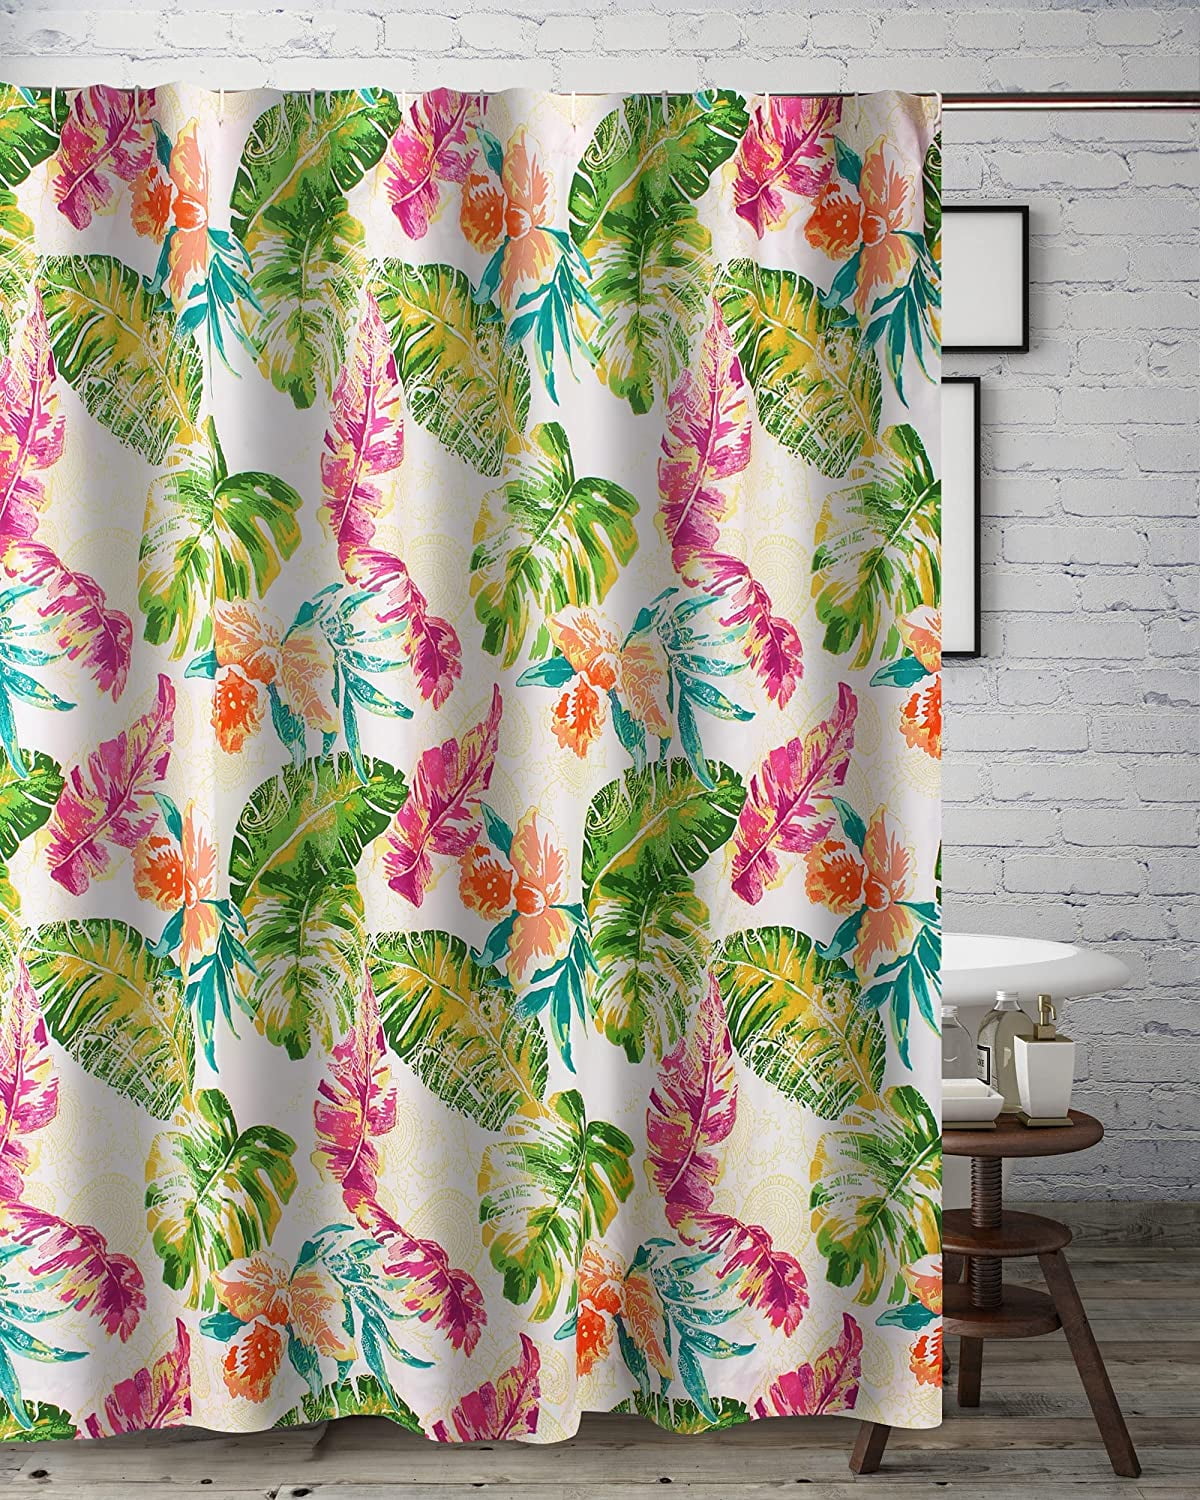 72" Waterproof Fabric Shower Curtain Set Tropical Green Leaves Flamingo Hibiscus 